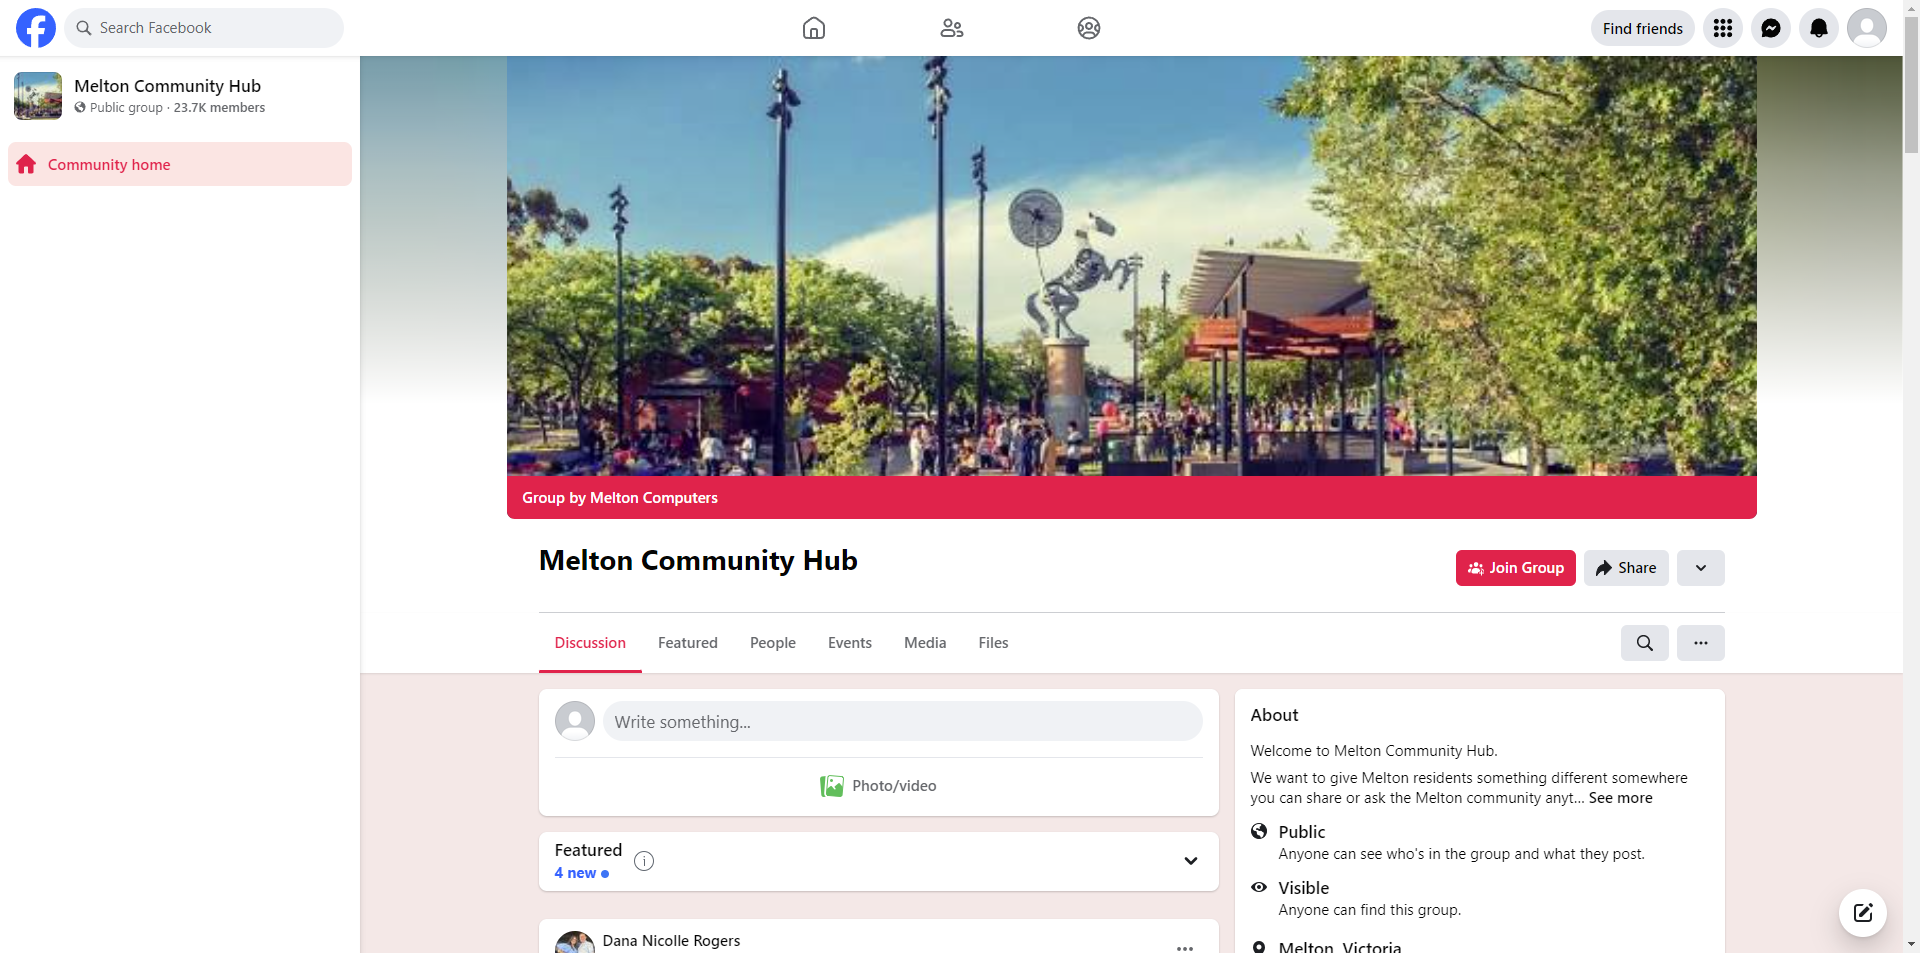 Melton Community Hub